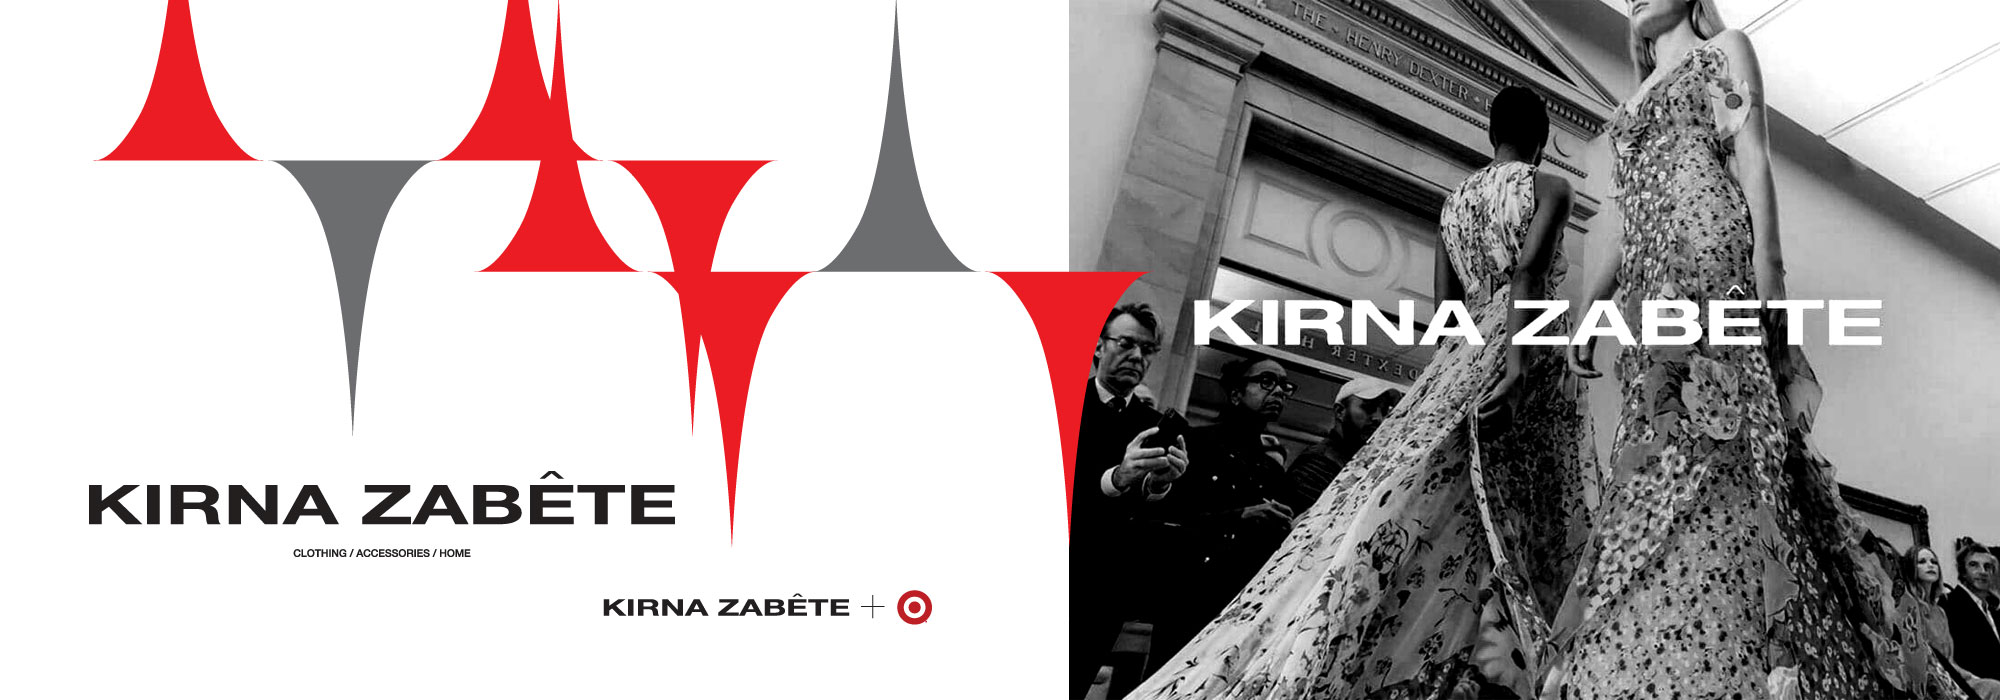 Kirna Zabete branding and packaging designed by MPAKT